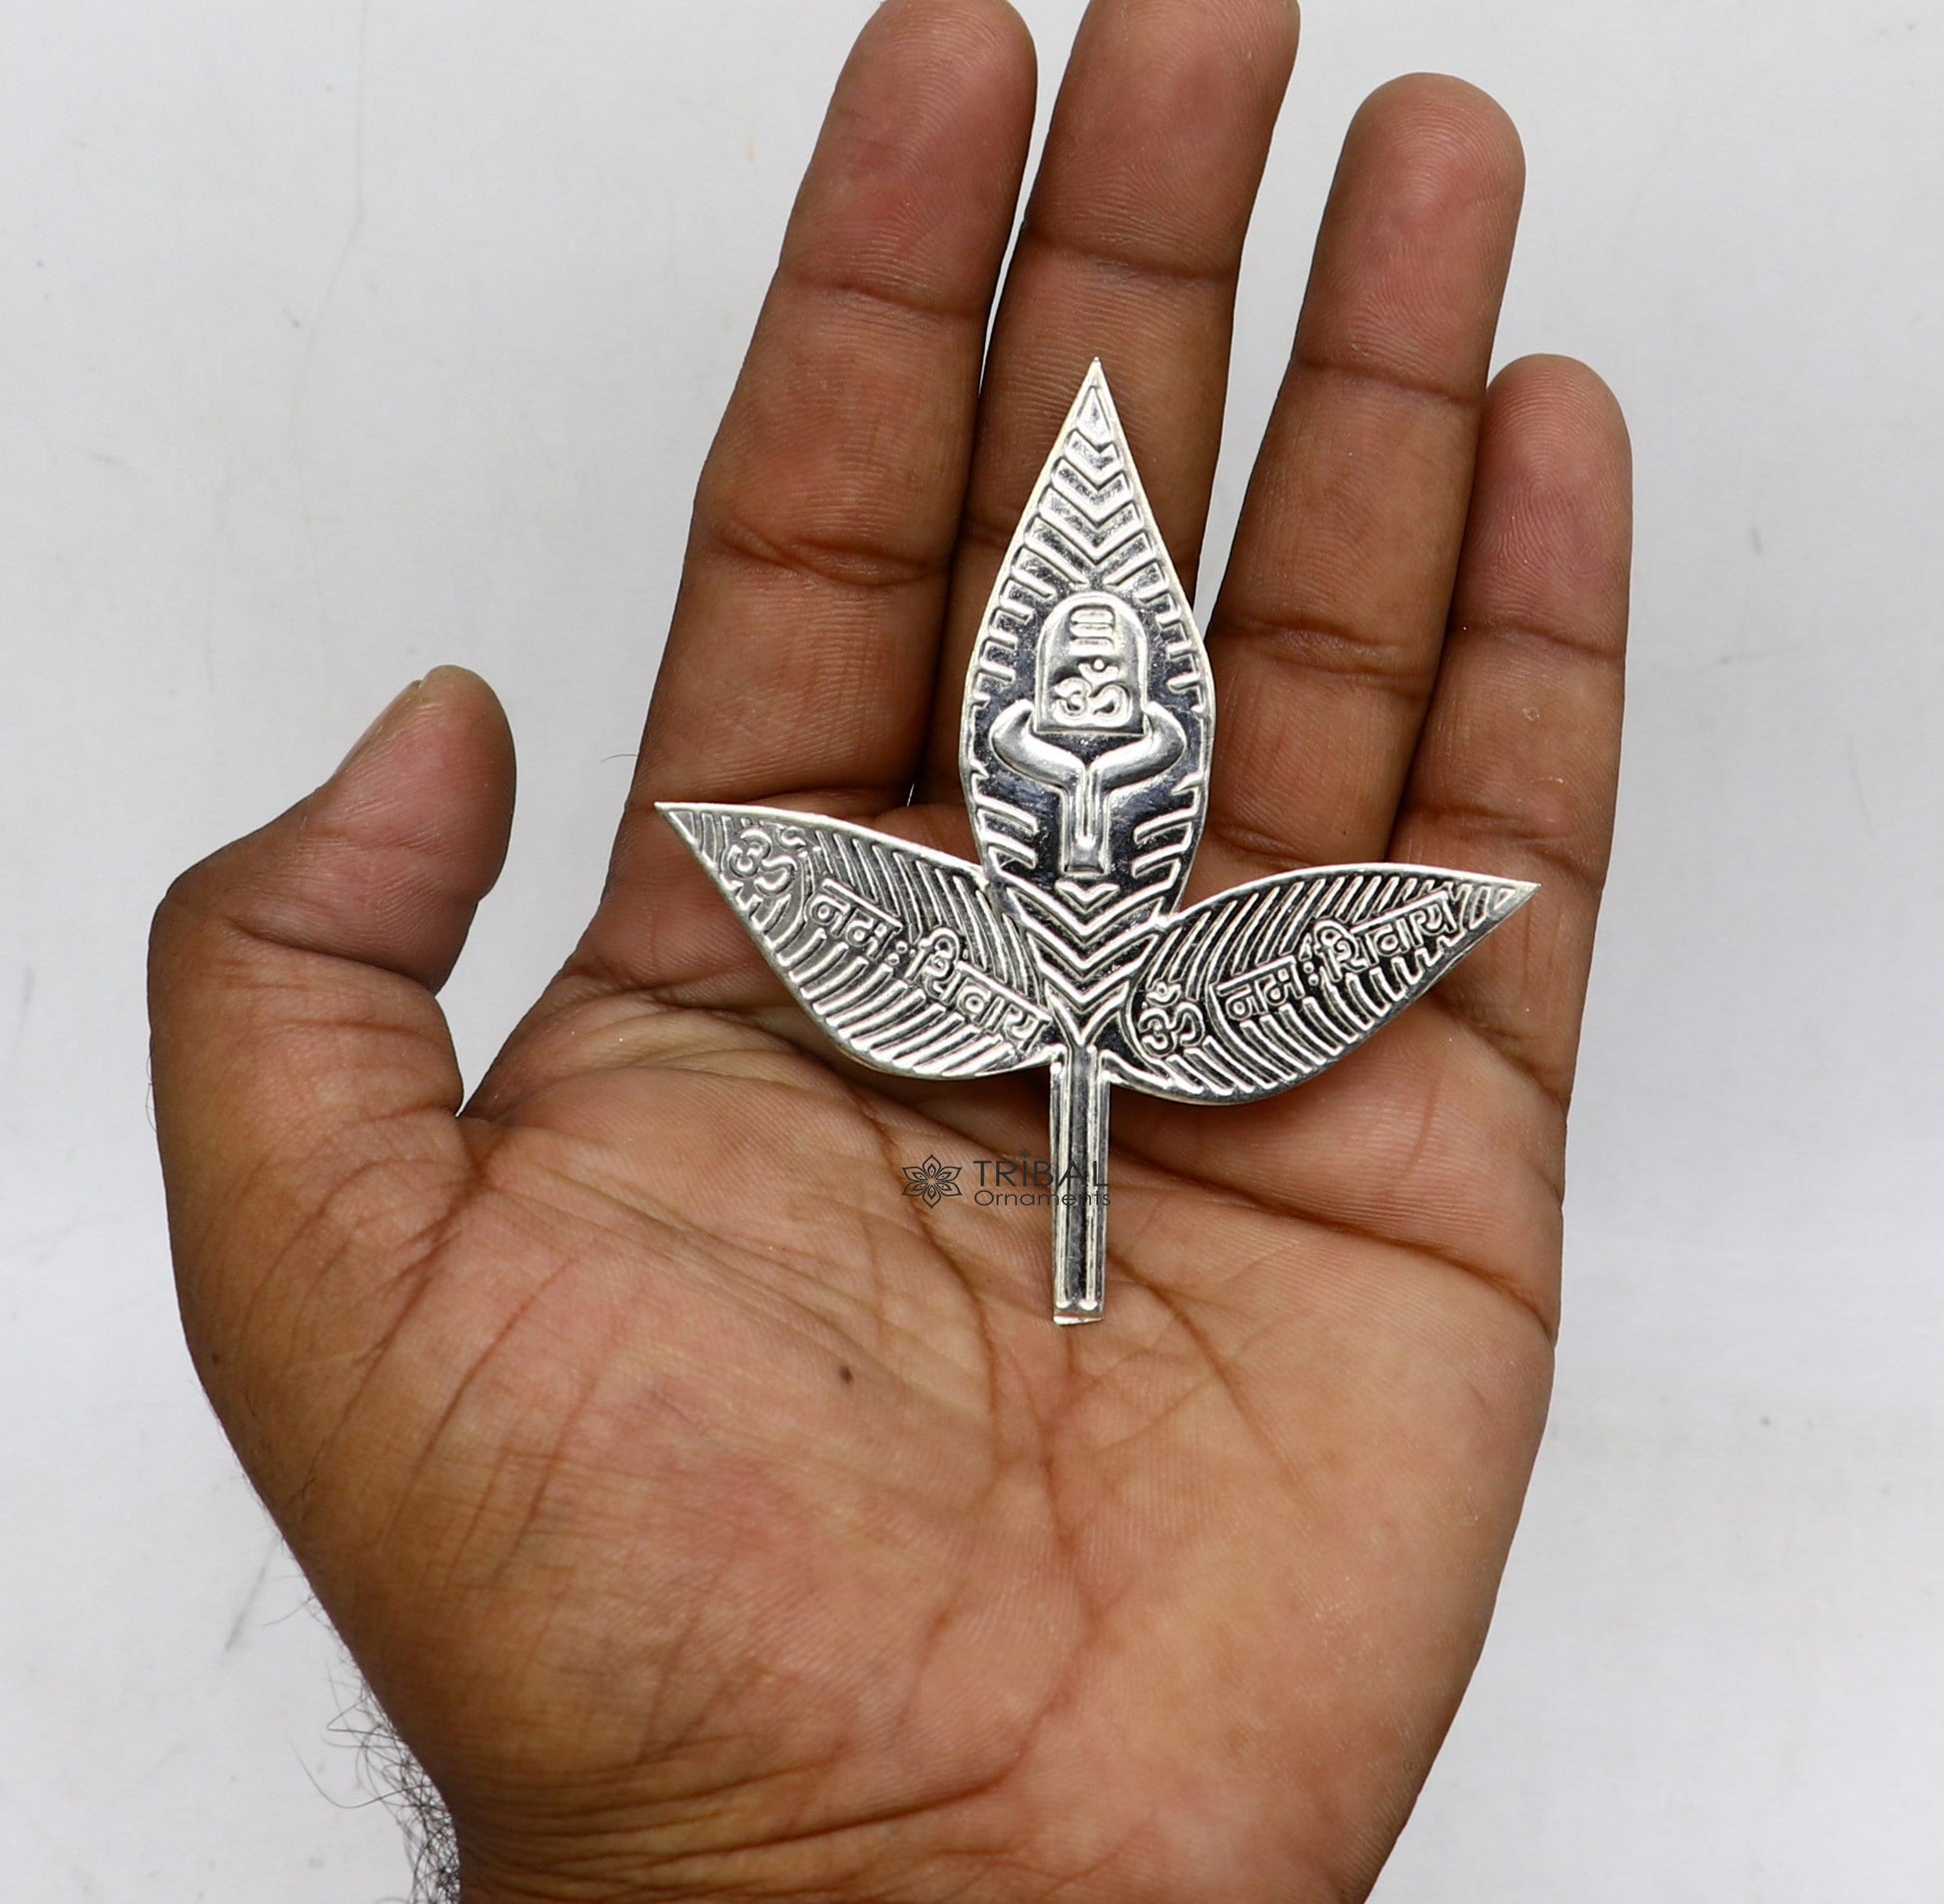 3" Lot Solid real silver handmade solid belva patra, shiva worshipping/ puja article, belpatra or bilva tree leaves su1132 - TRIBAL ORNAMENTS